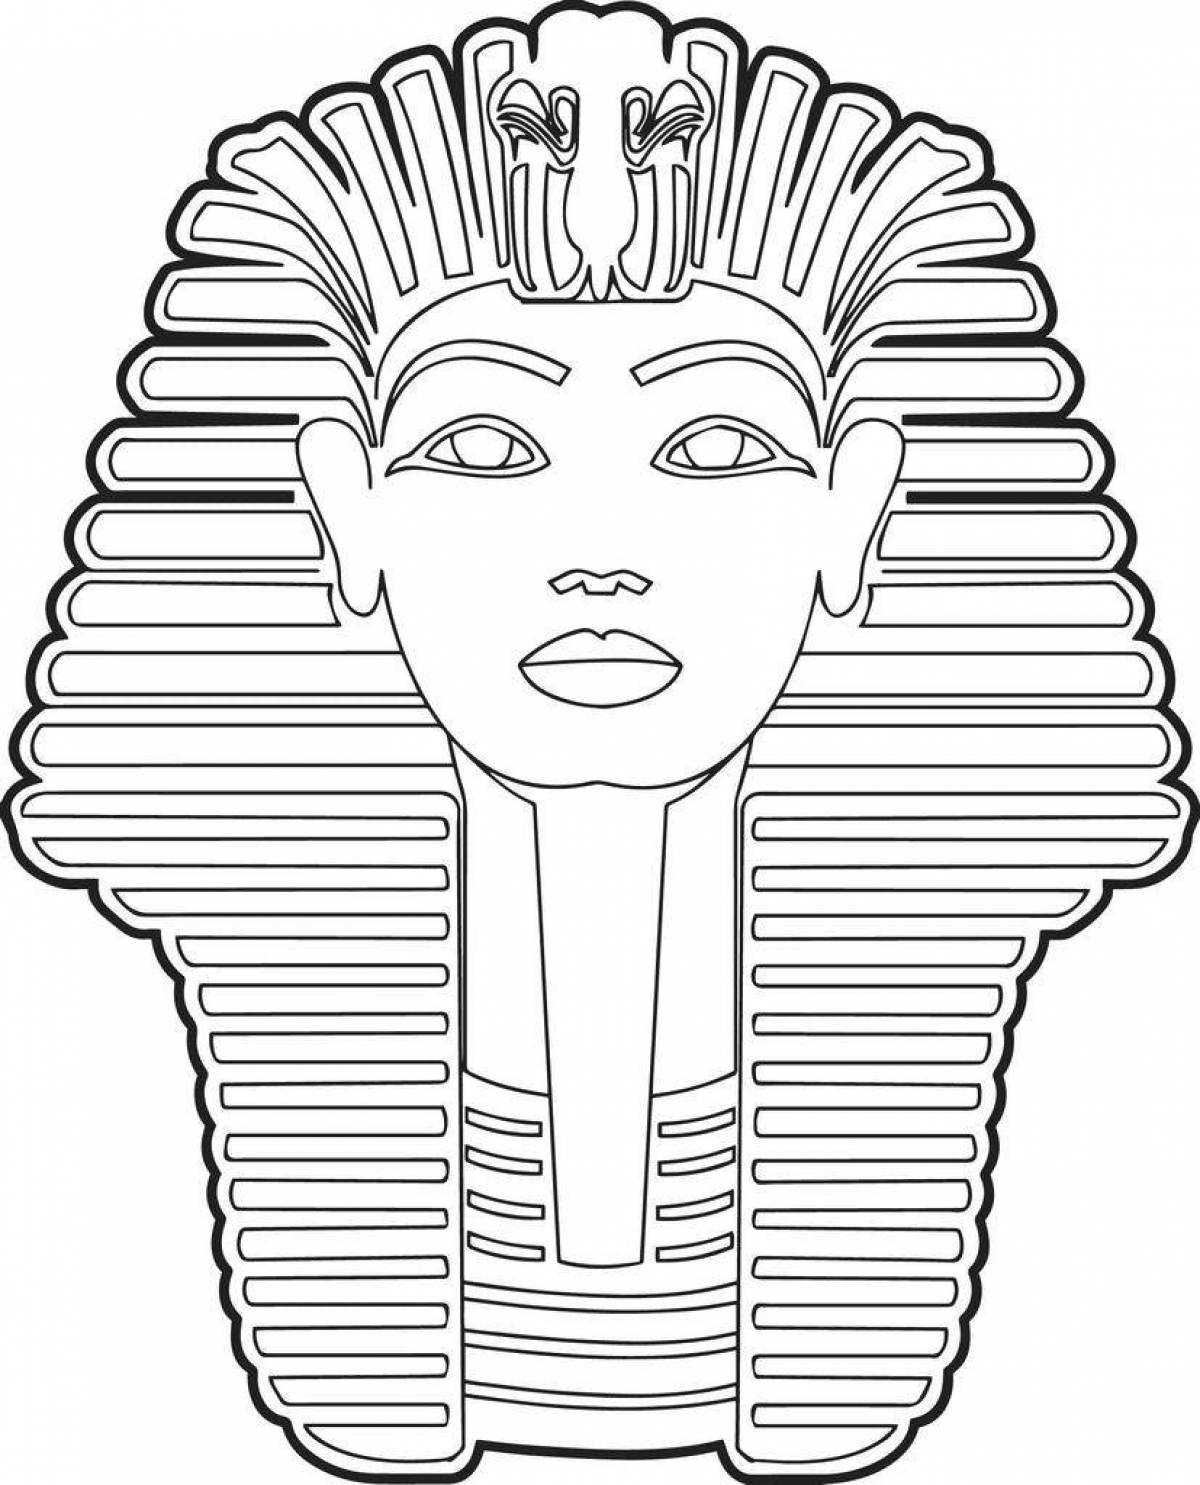 Great pharaoh coloring page